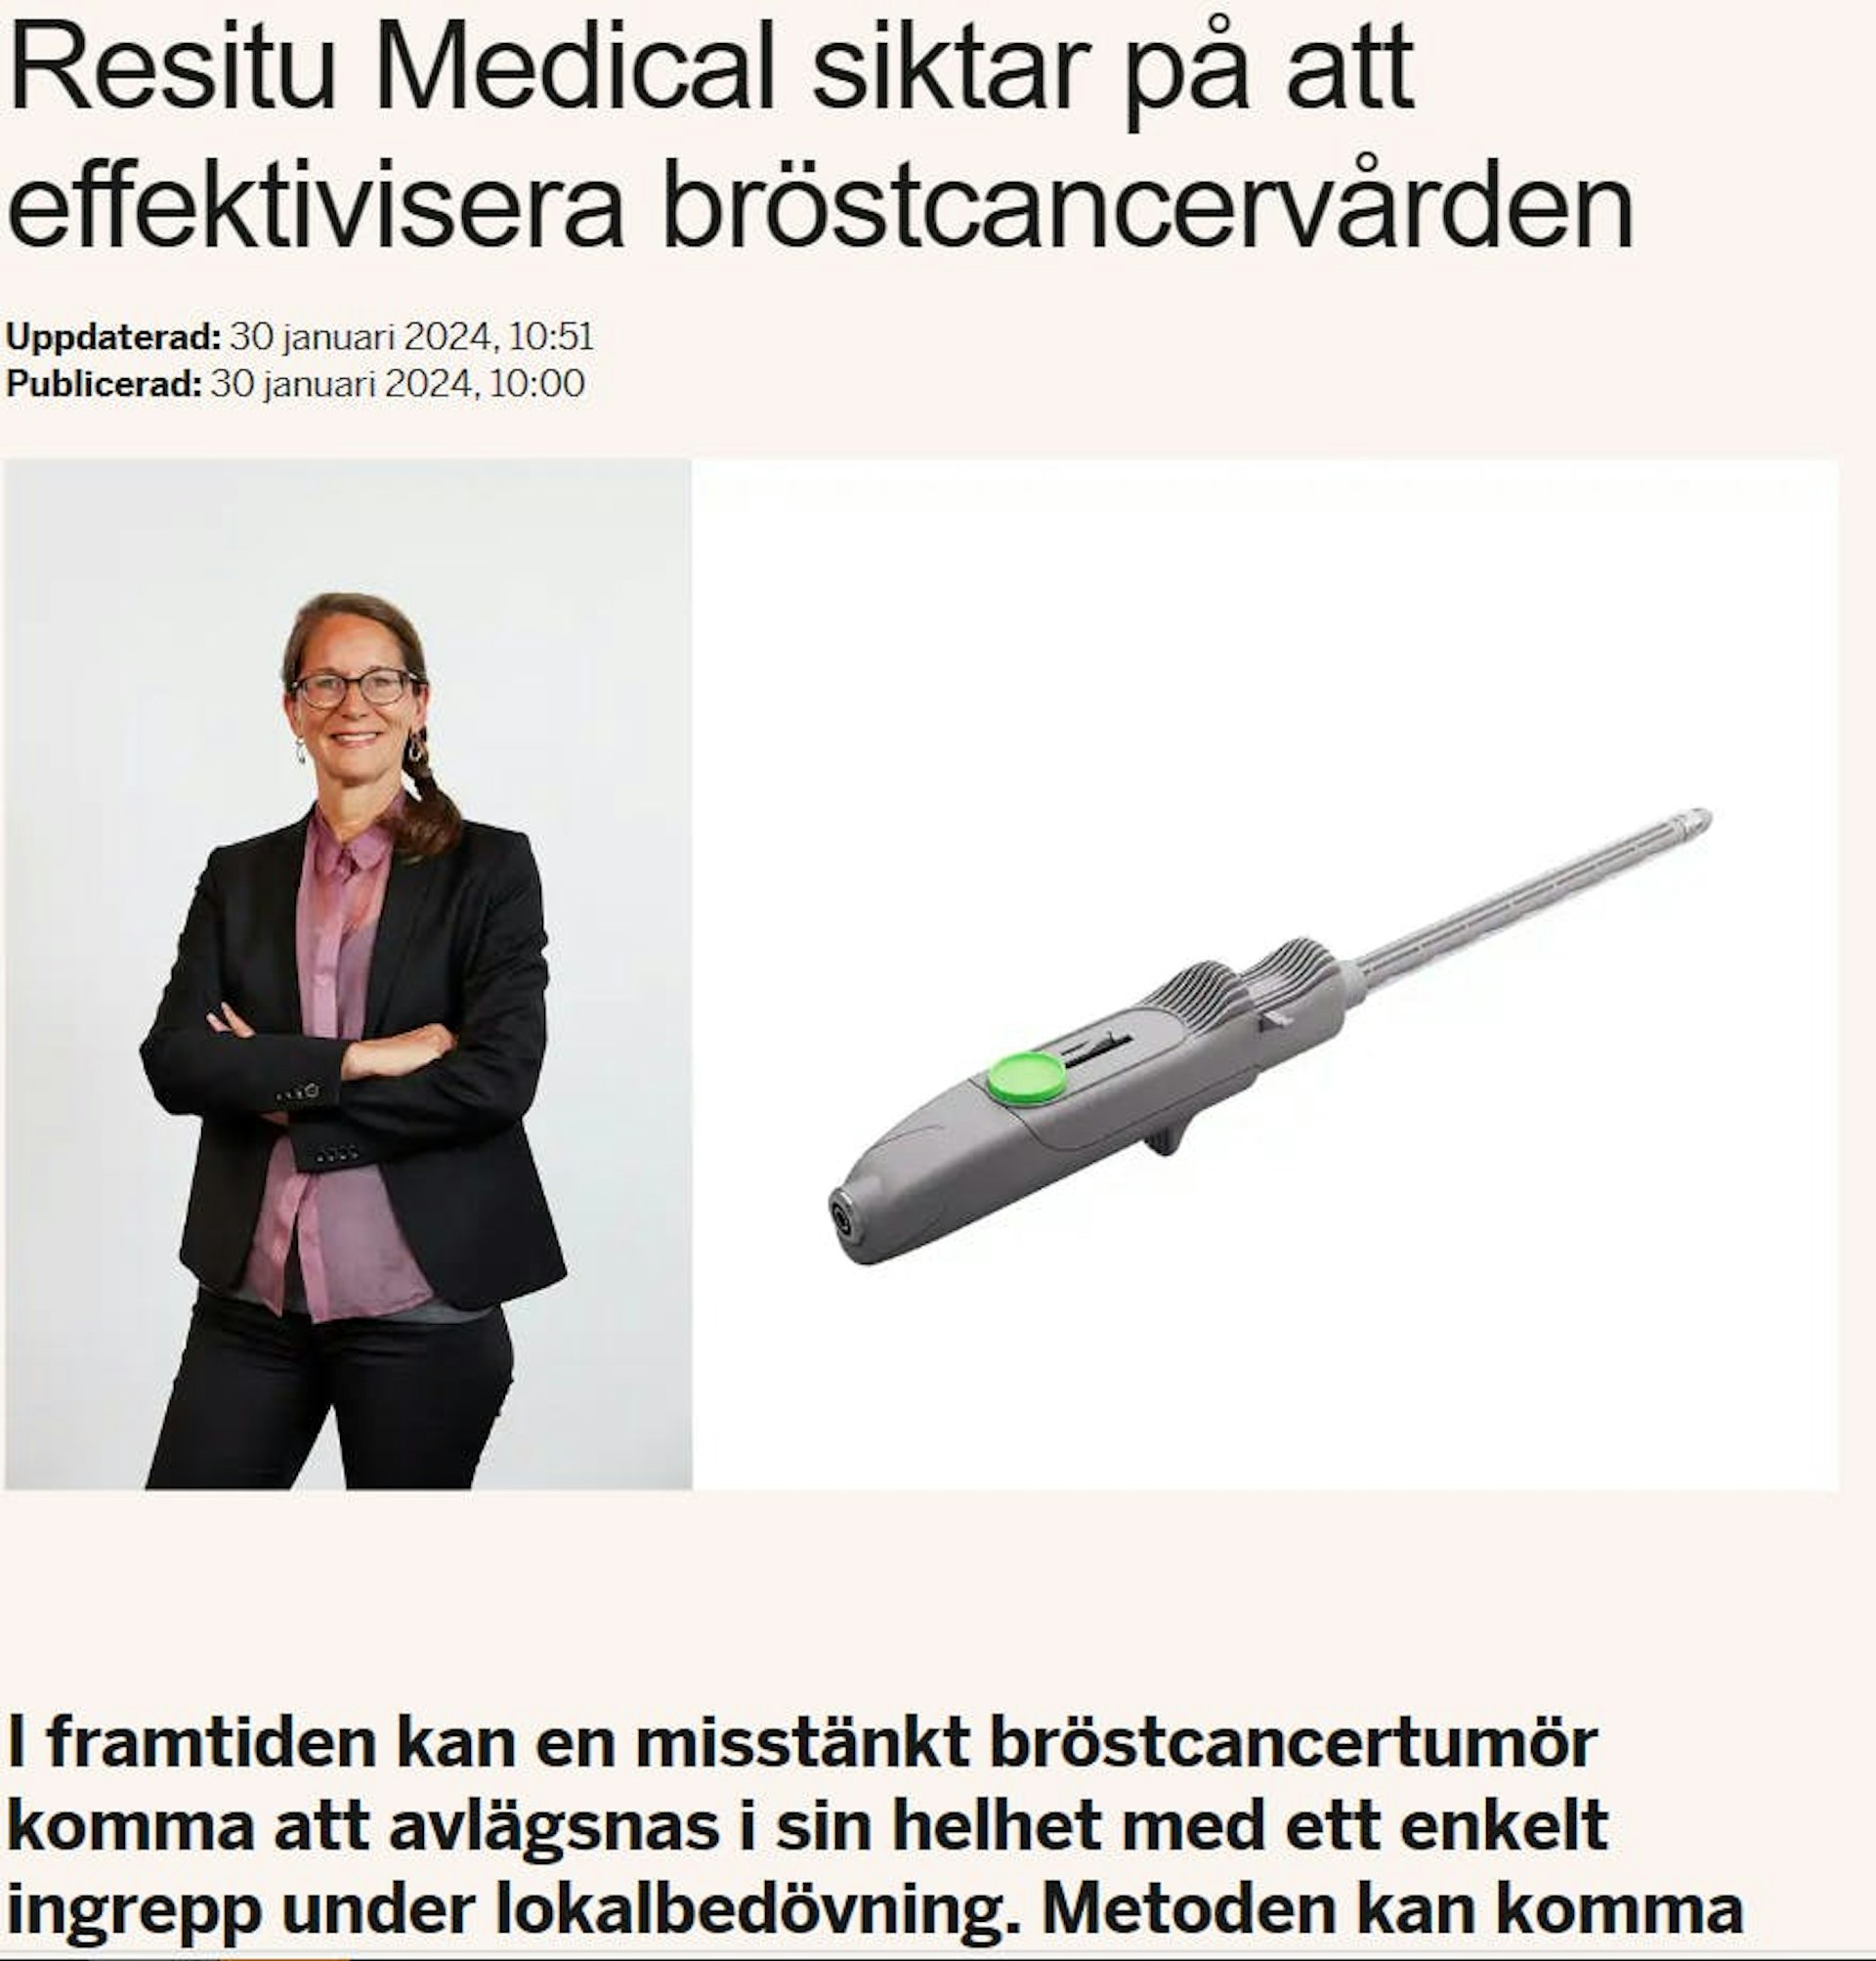 Resitu medical interview in newspaper Dagens Industri